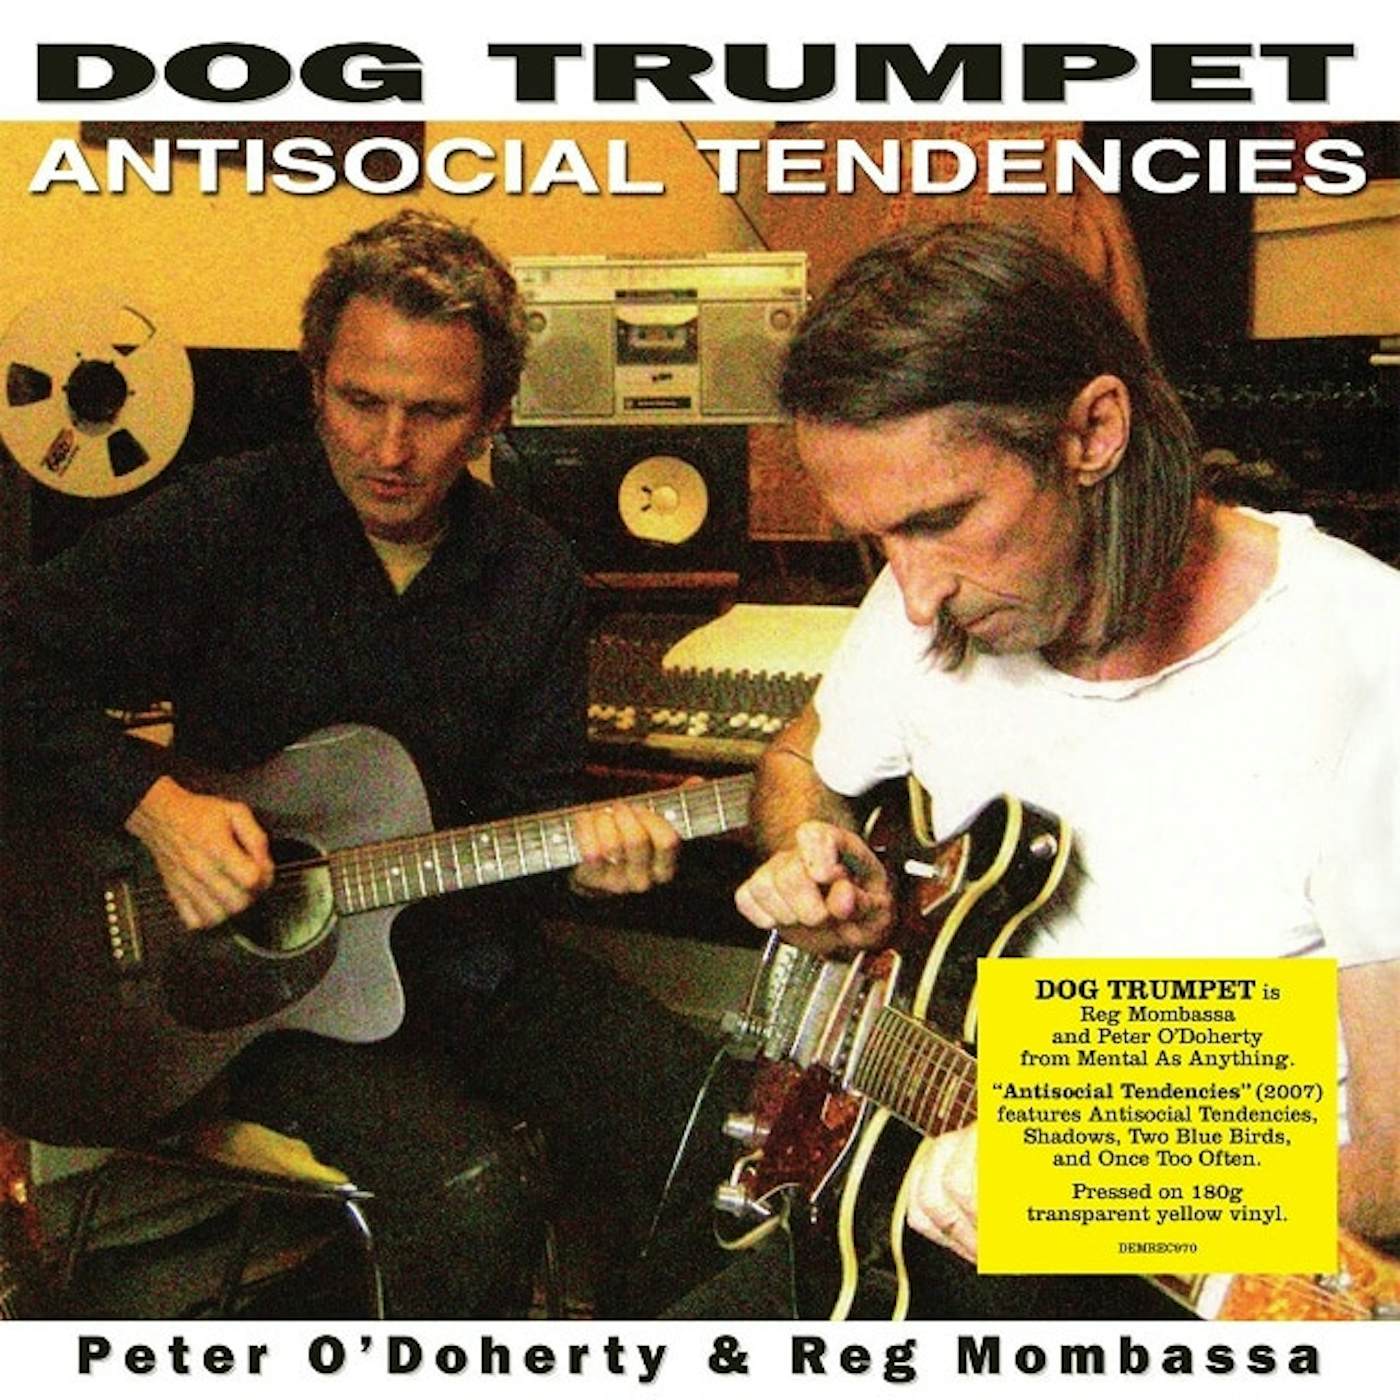 Dog Trumpet Antisocial Tendencies Vinyl Record